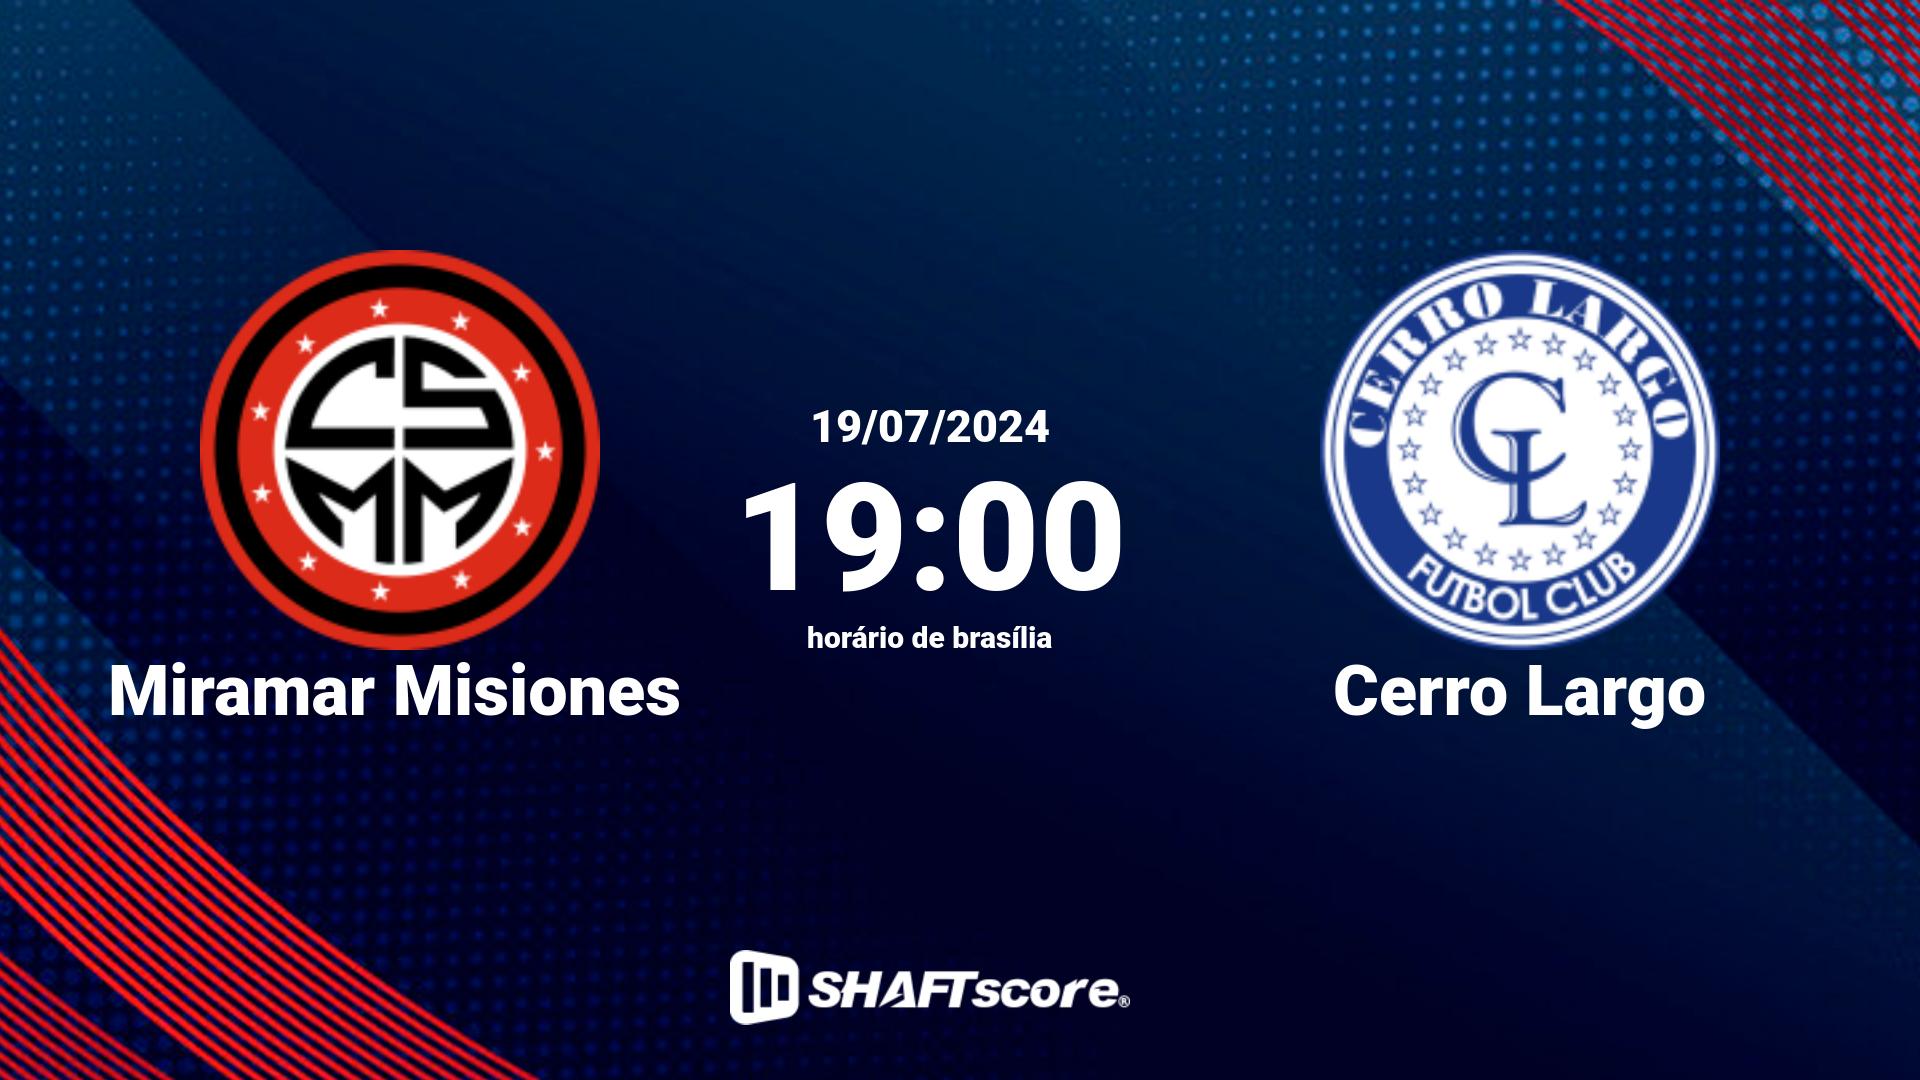 Estatísticas do jogo Miramar Misiones vs Cerro Largo 19.07 19:00